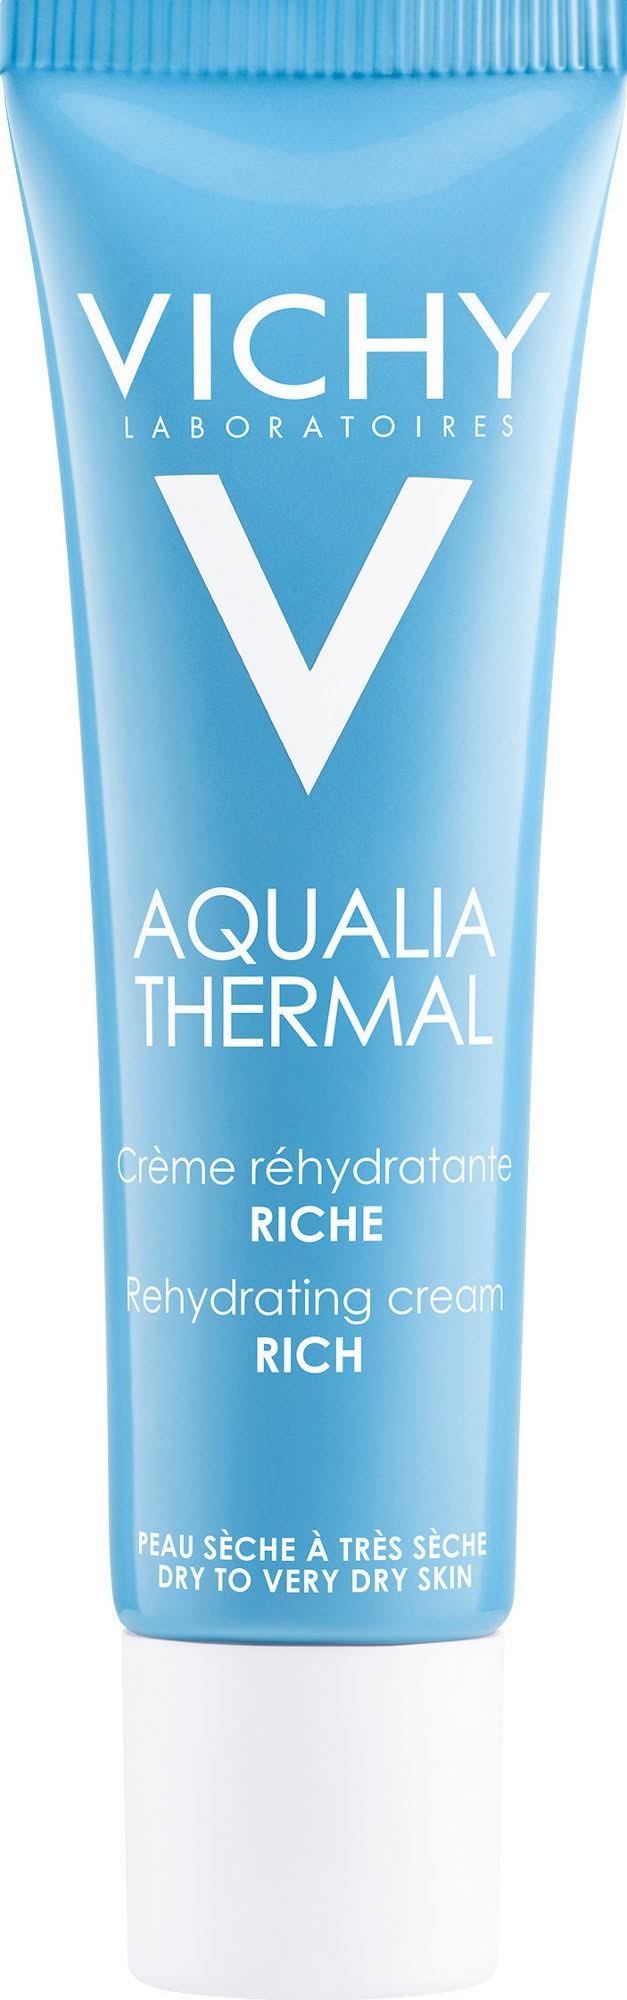 Aqualia Thermal Rich Cream 30ml Vichy